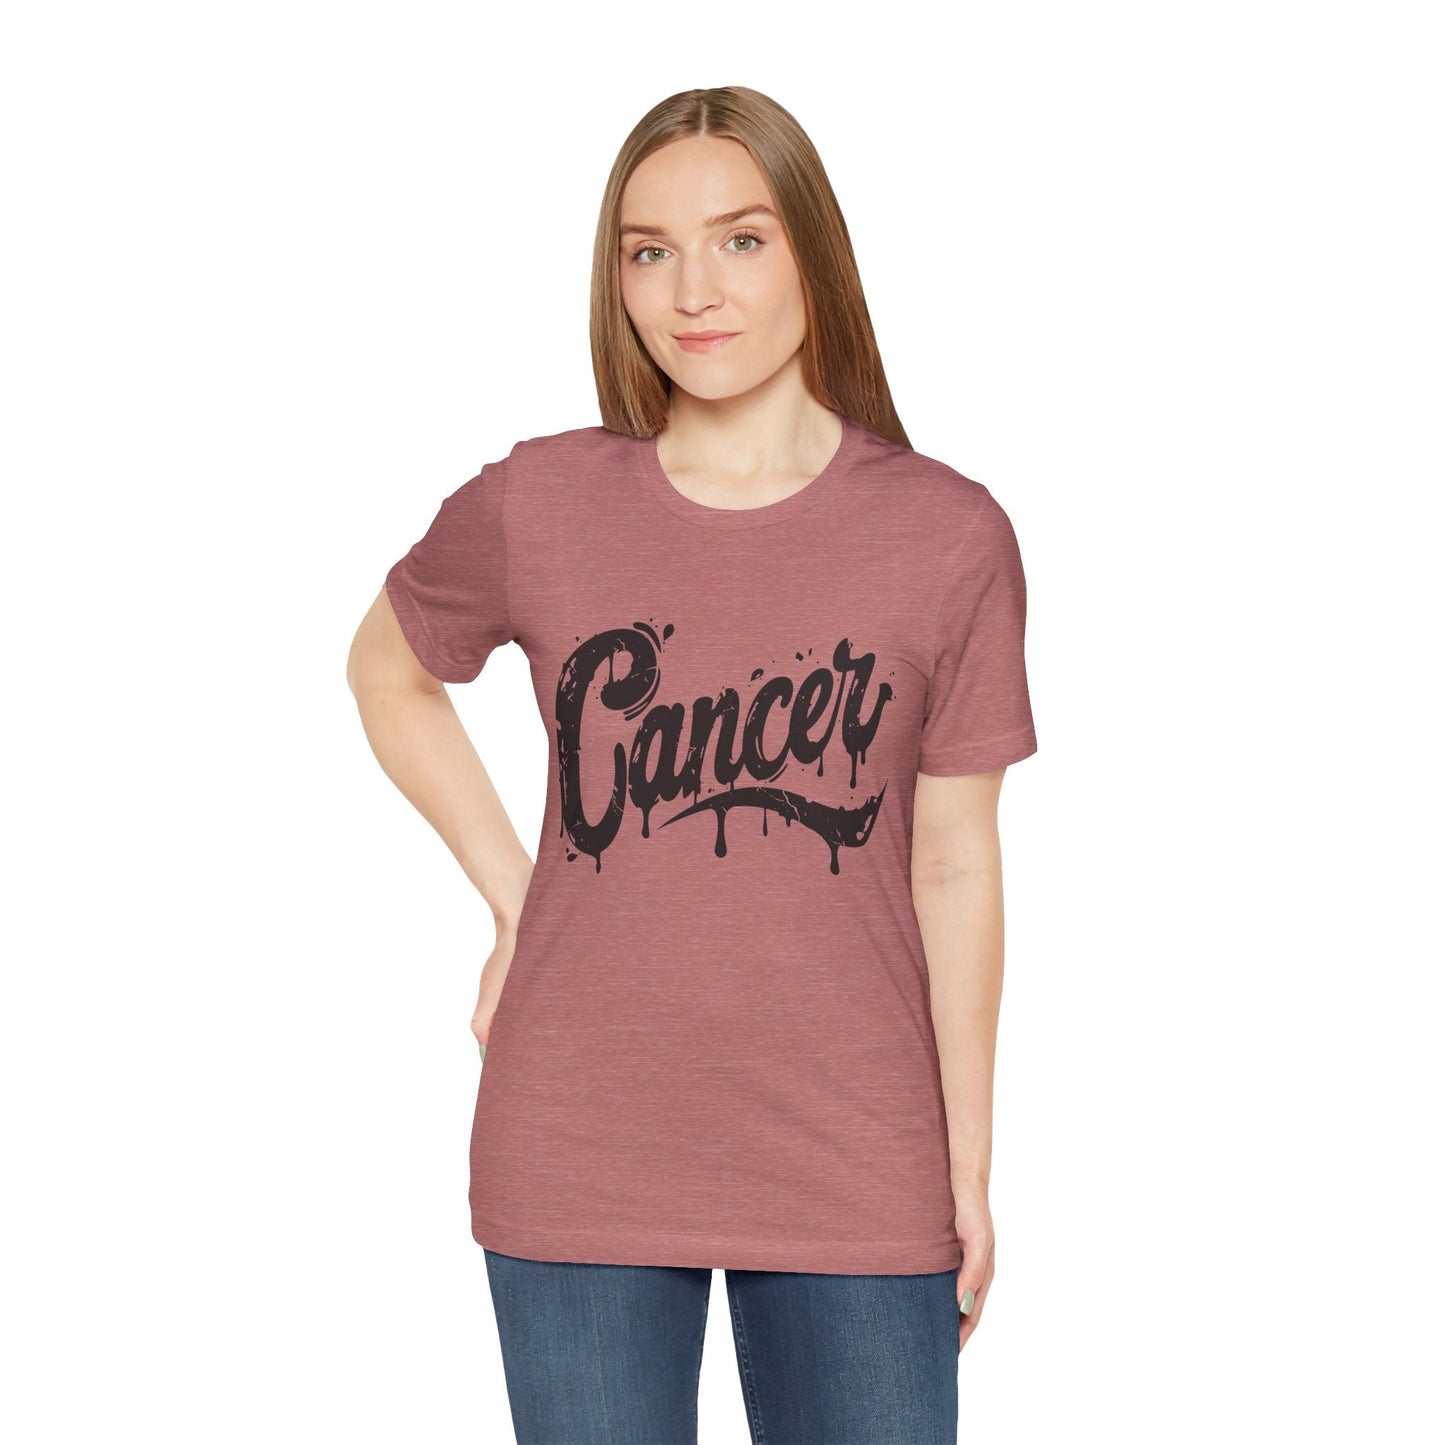 T-Shirt Tidal Emotion Cancer TShirt: Flow with Feeling